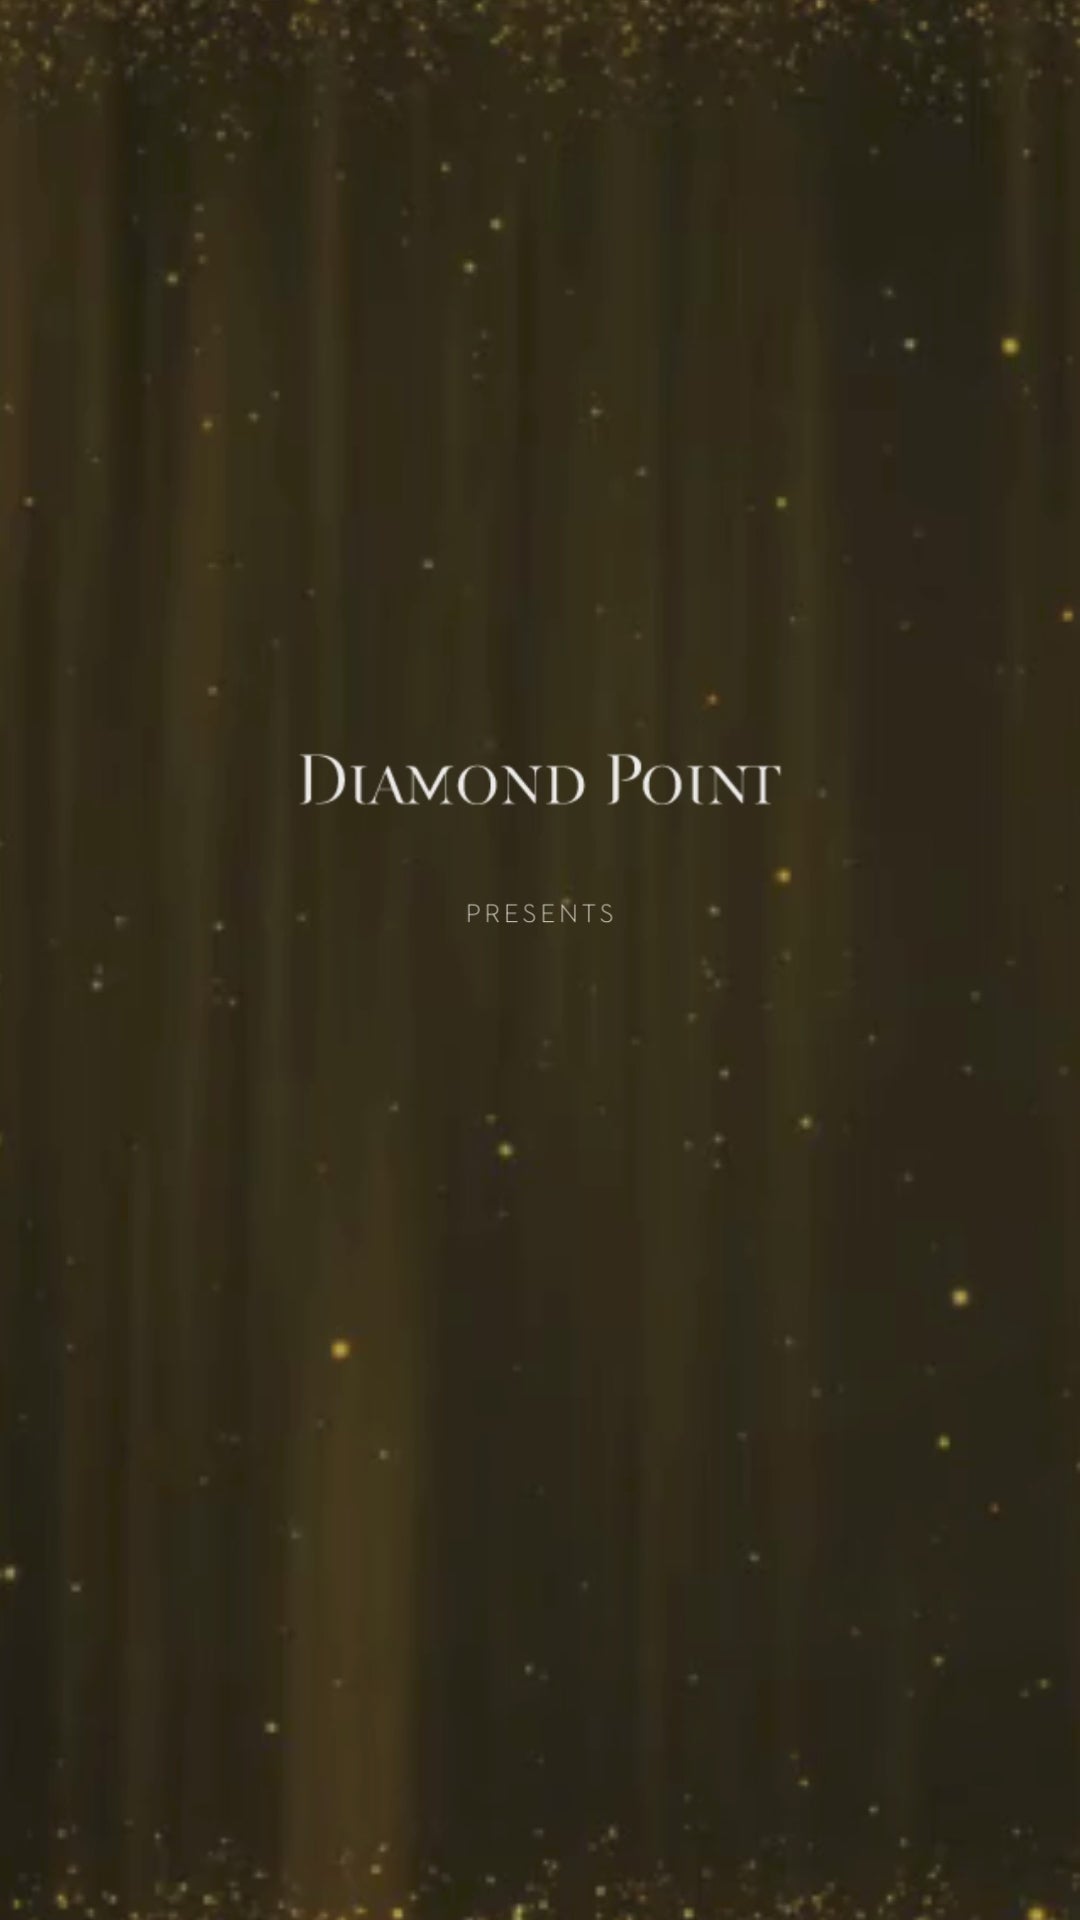 Gouden ring, 0.25 ct diamant, Starlight